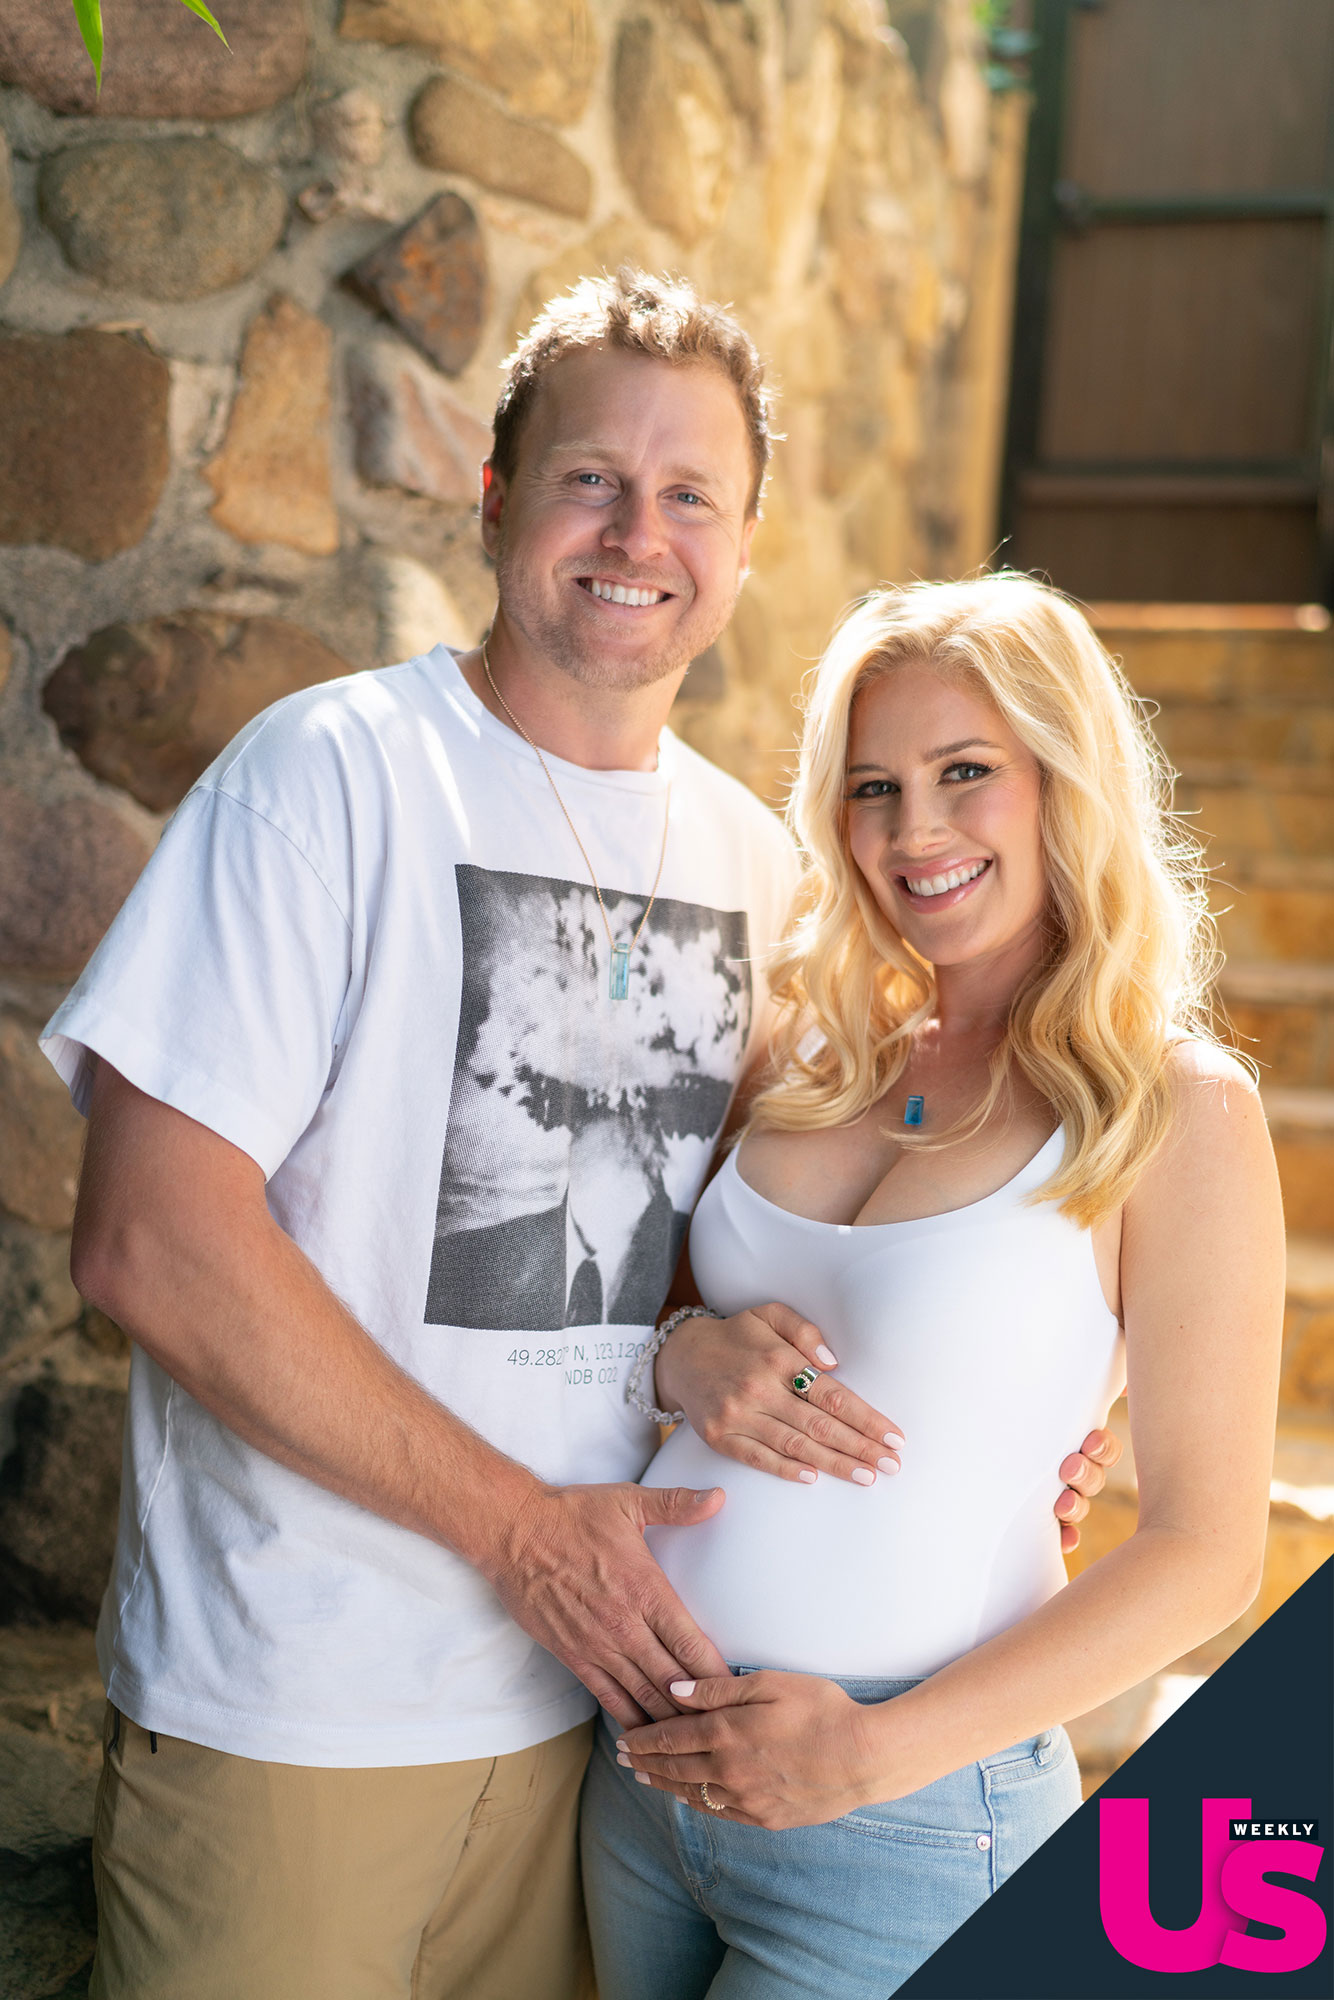 Heidi Montag Pregnant, Expecting Baby No. 2 With Spencer Pratt